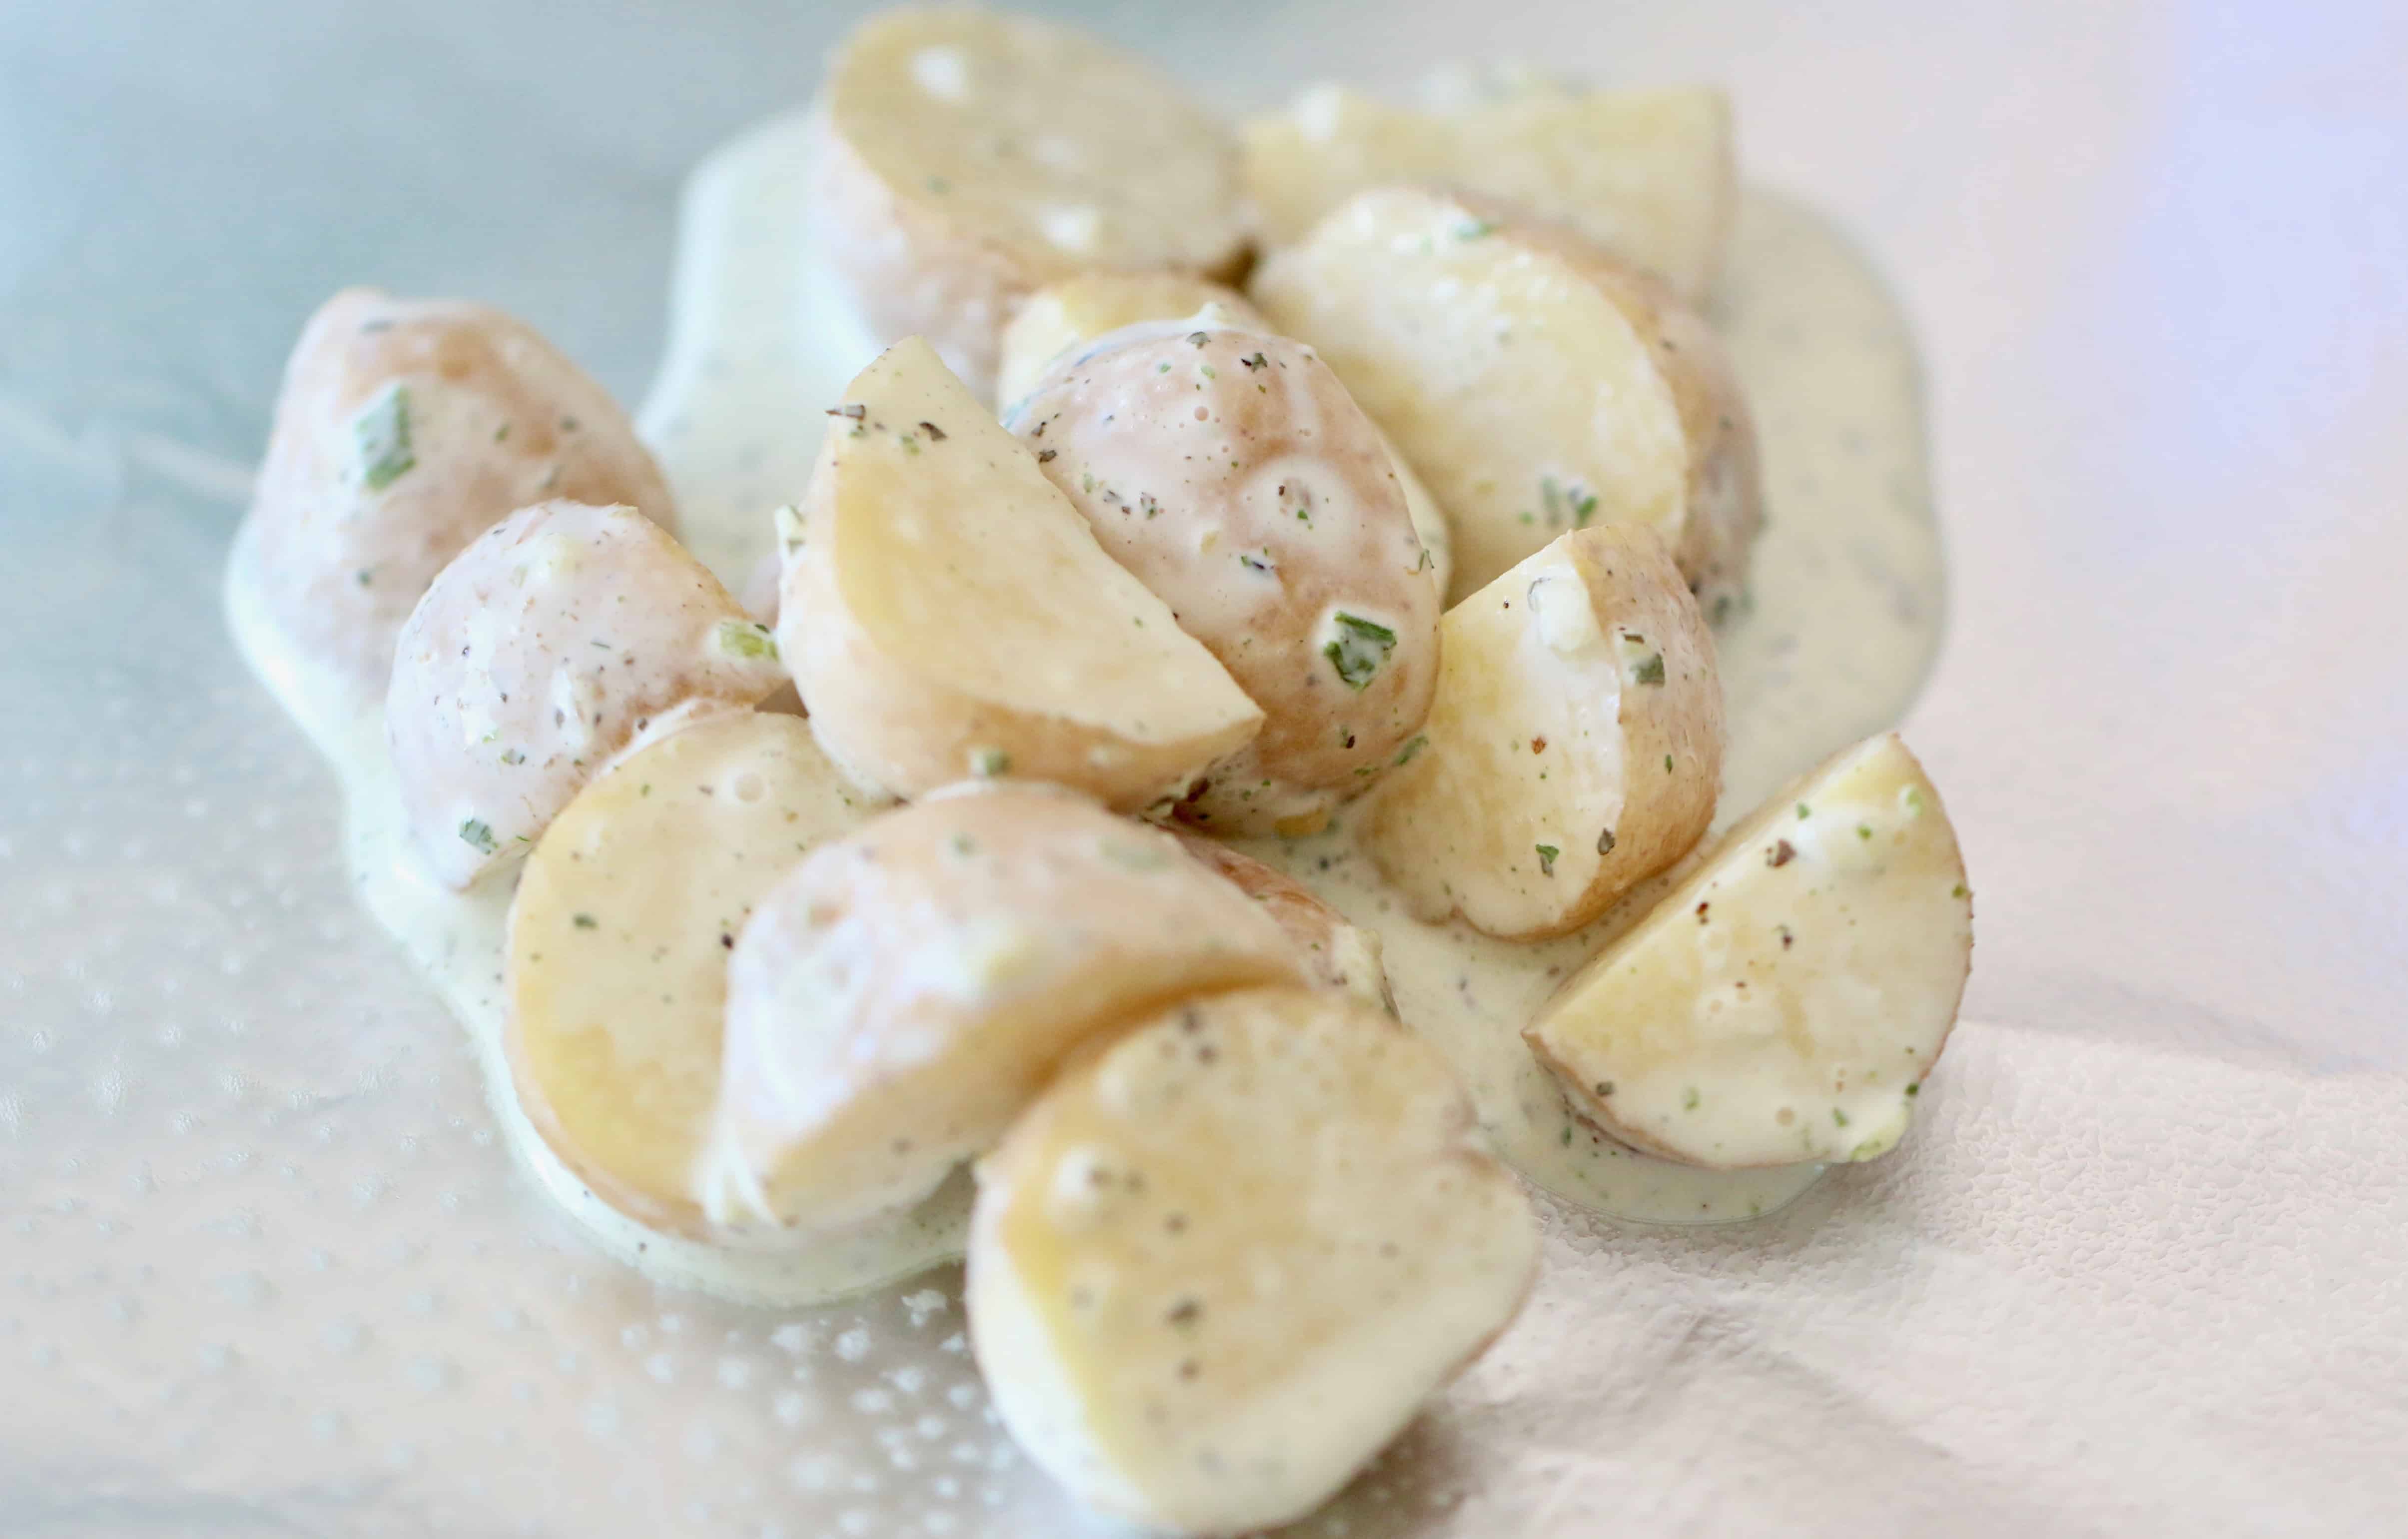 heavy cream coated Little Potatoes on a large foil sheet.